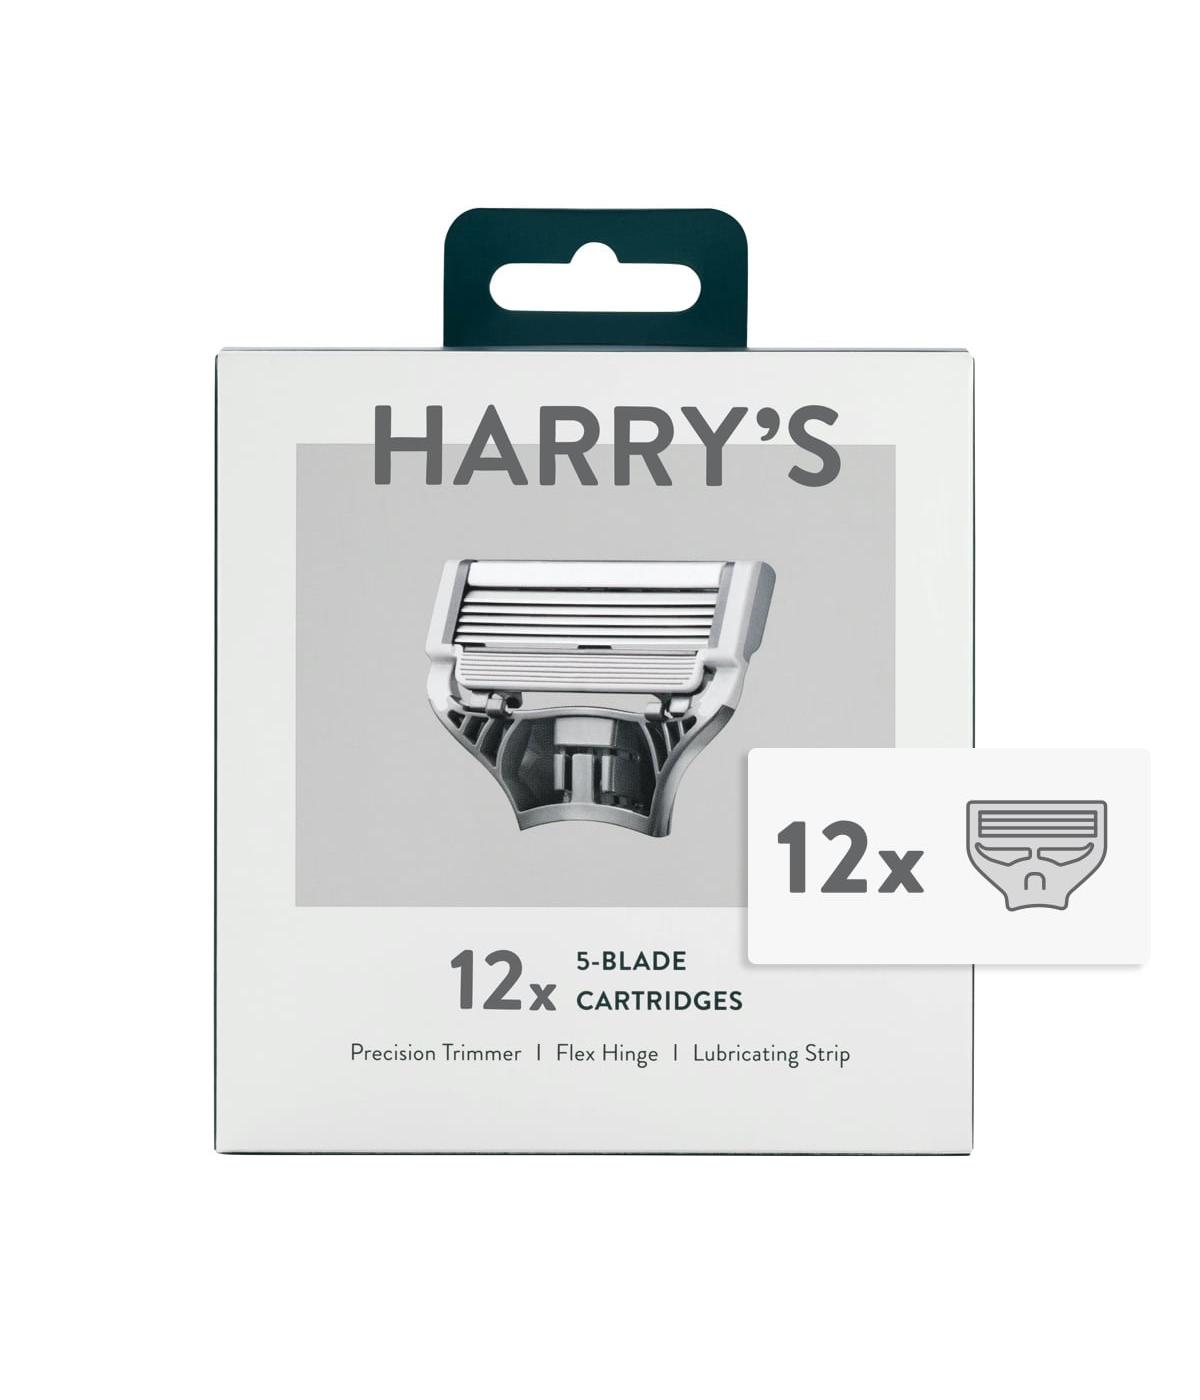 Harry's Five-Blade Razor Cartridges; image 1 of 6